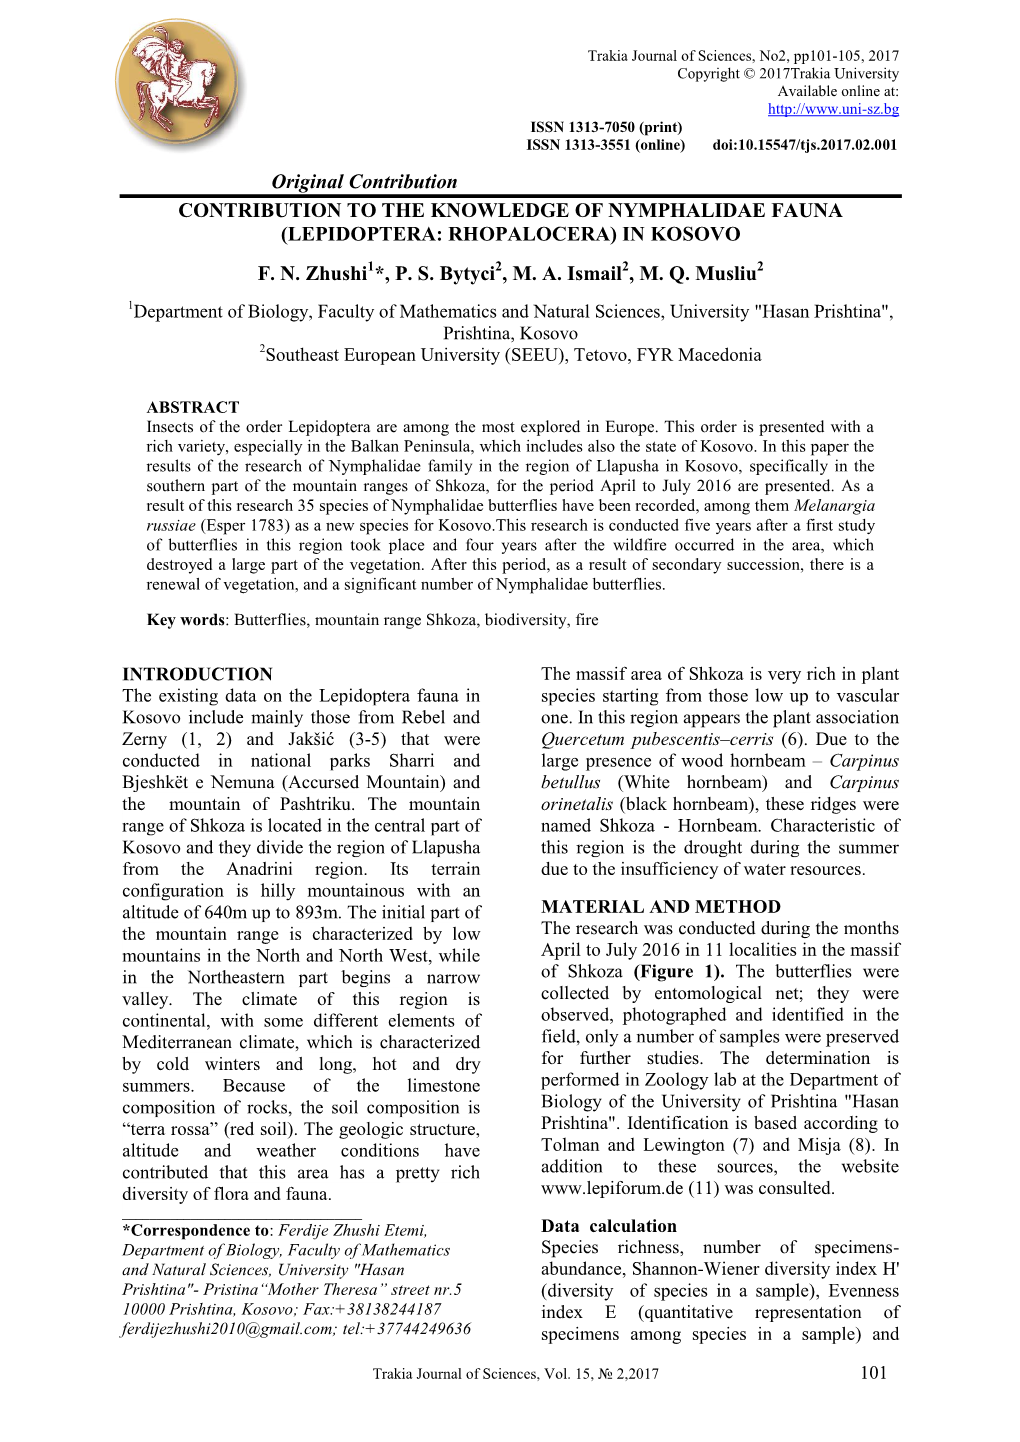 Original Contribution CONTRIBUTION to the KNOWLEDGE of NYMPHALIDAE FAUNA (LEPIDOPTERA: RHOPALOCERA) in KOSOVO F. N. Zhushi *, P